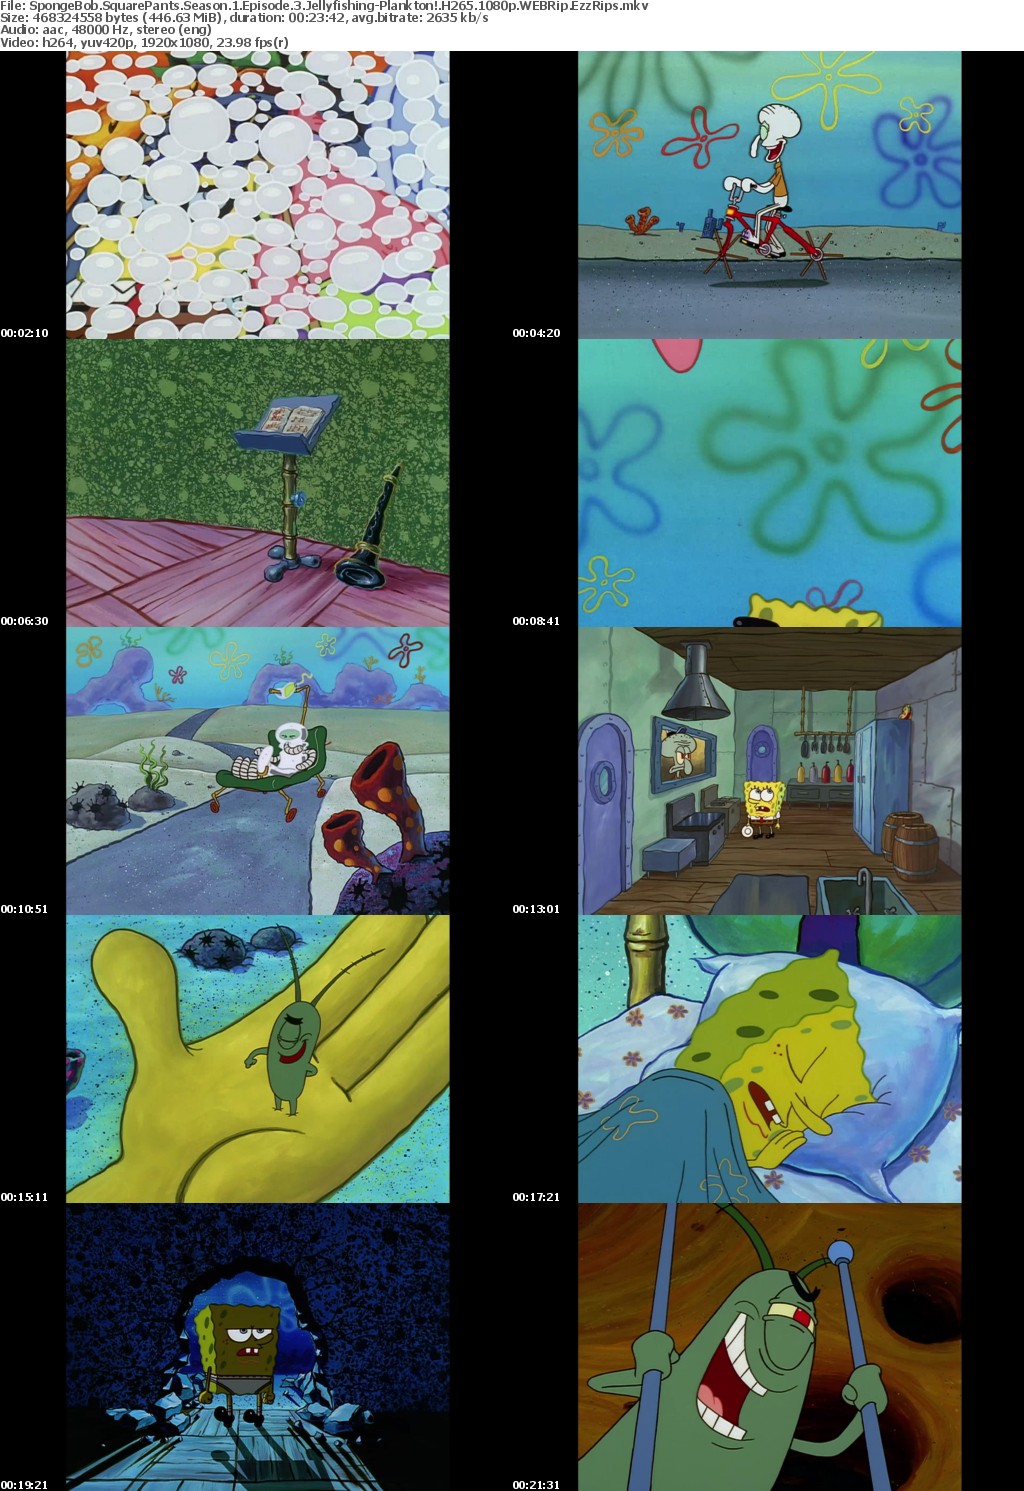 SpongeBob SquarePants Season 1 Episode 3 Jellyfishing-Plankton! H265 1080p WEBRip EzzRips